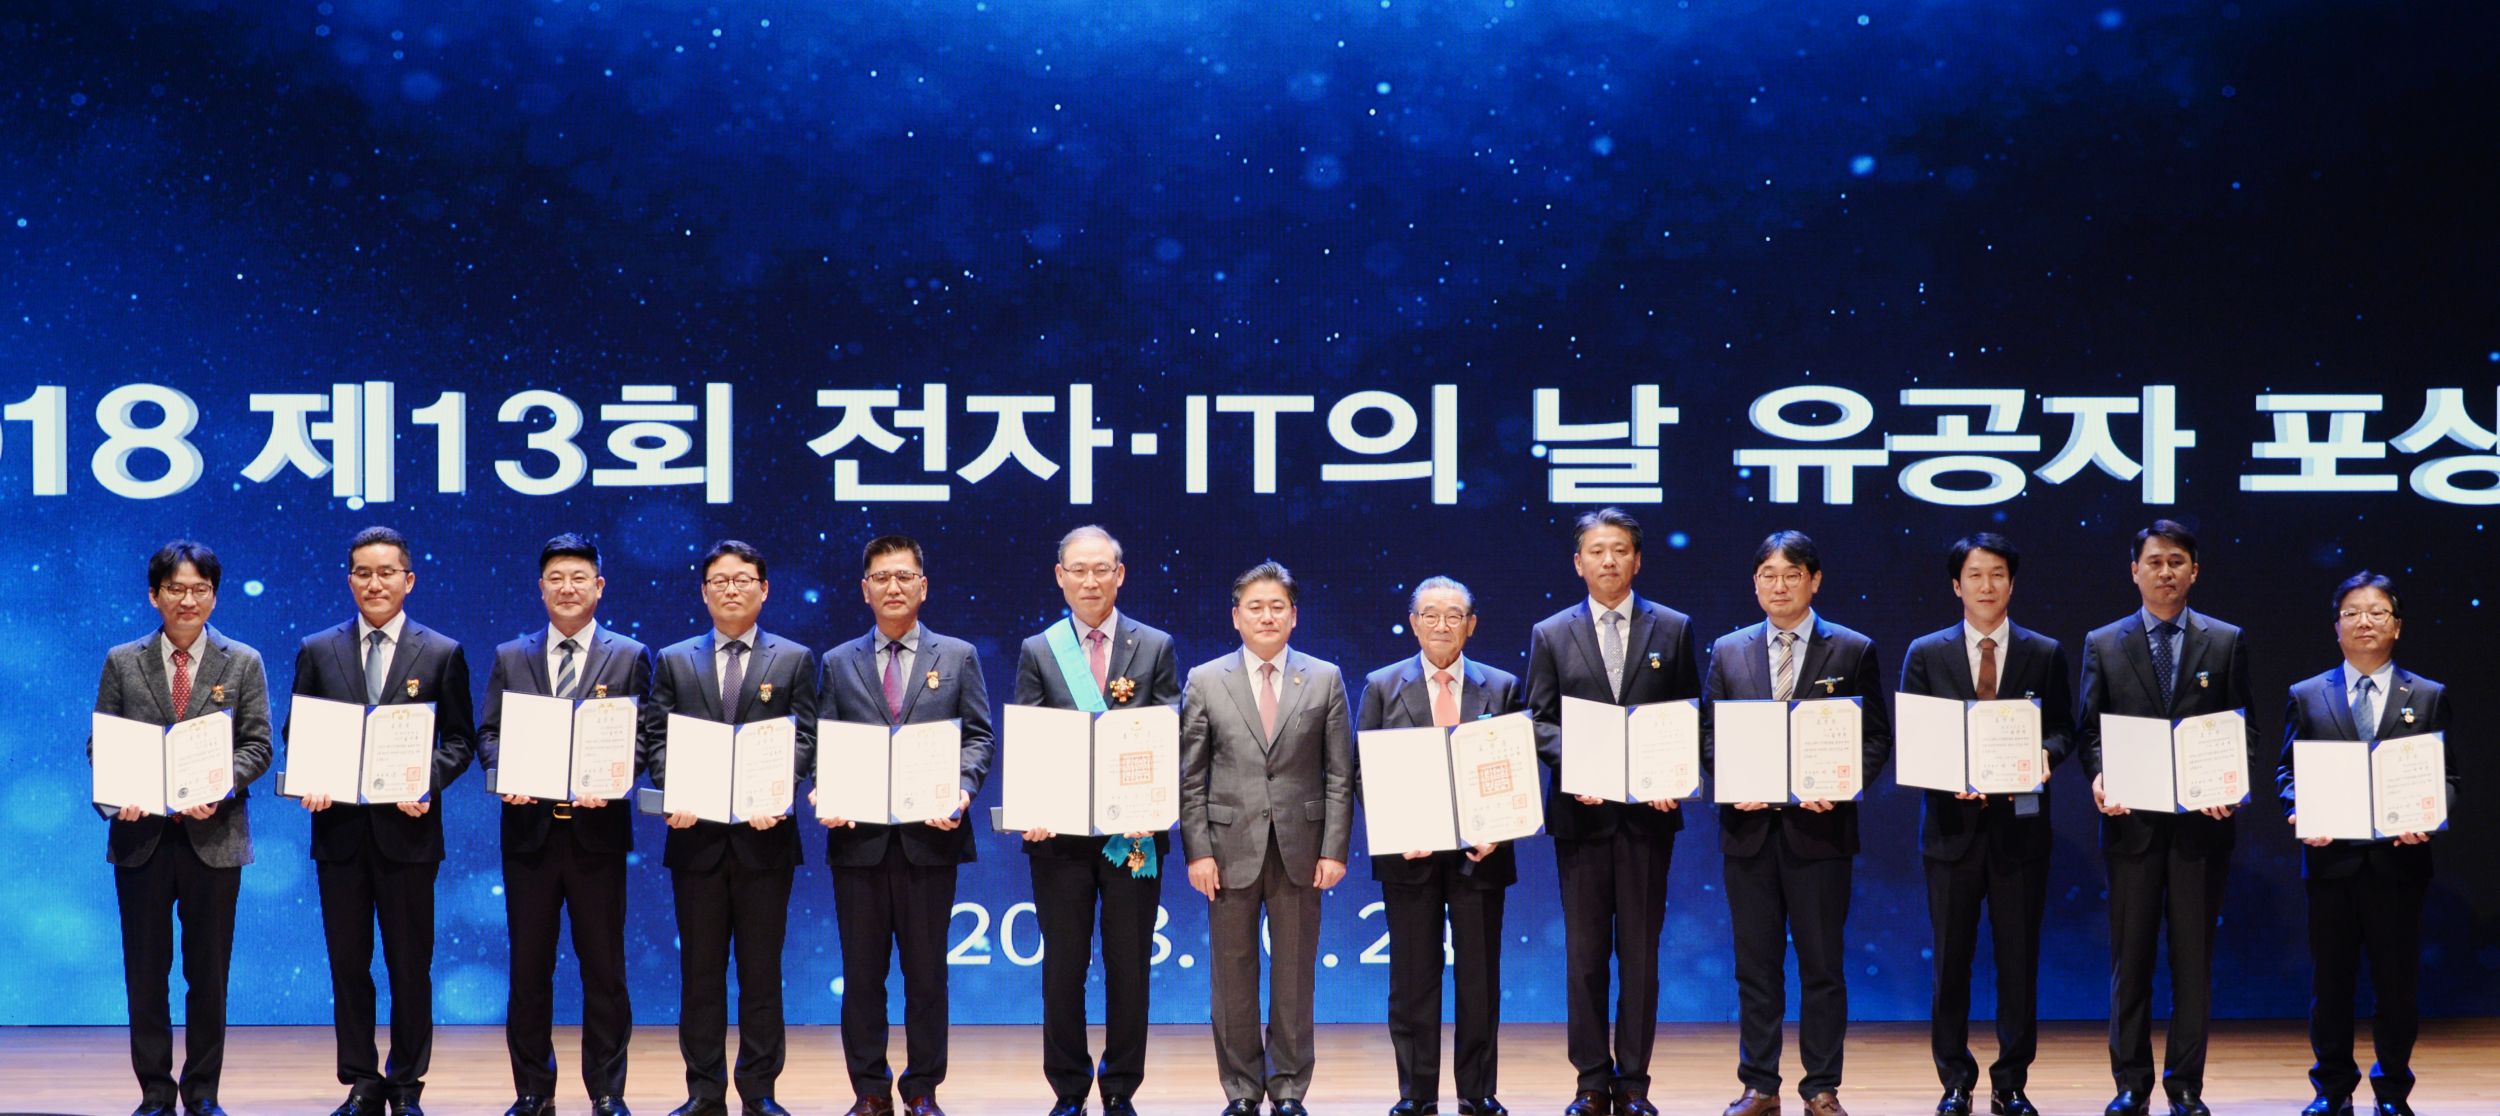 LG전자 H&A사업본부장 송대현 사장(왼쪽에서 6번째)이 24일 '제 13회 전자 IT의 날' 기념식에서 금탑산업훈장을 수상했다. 